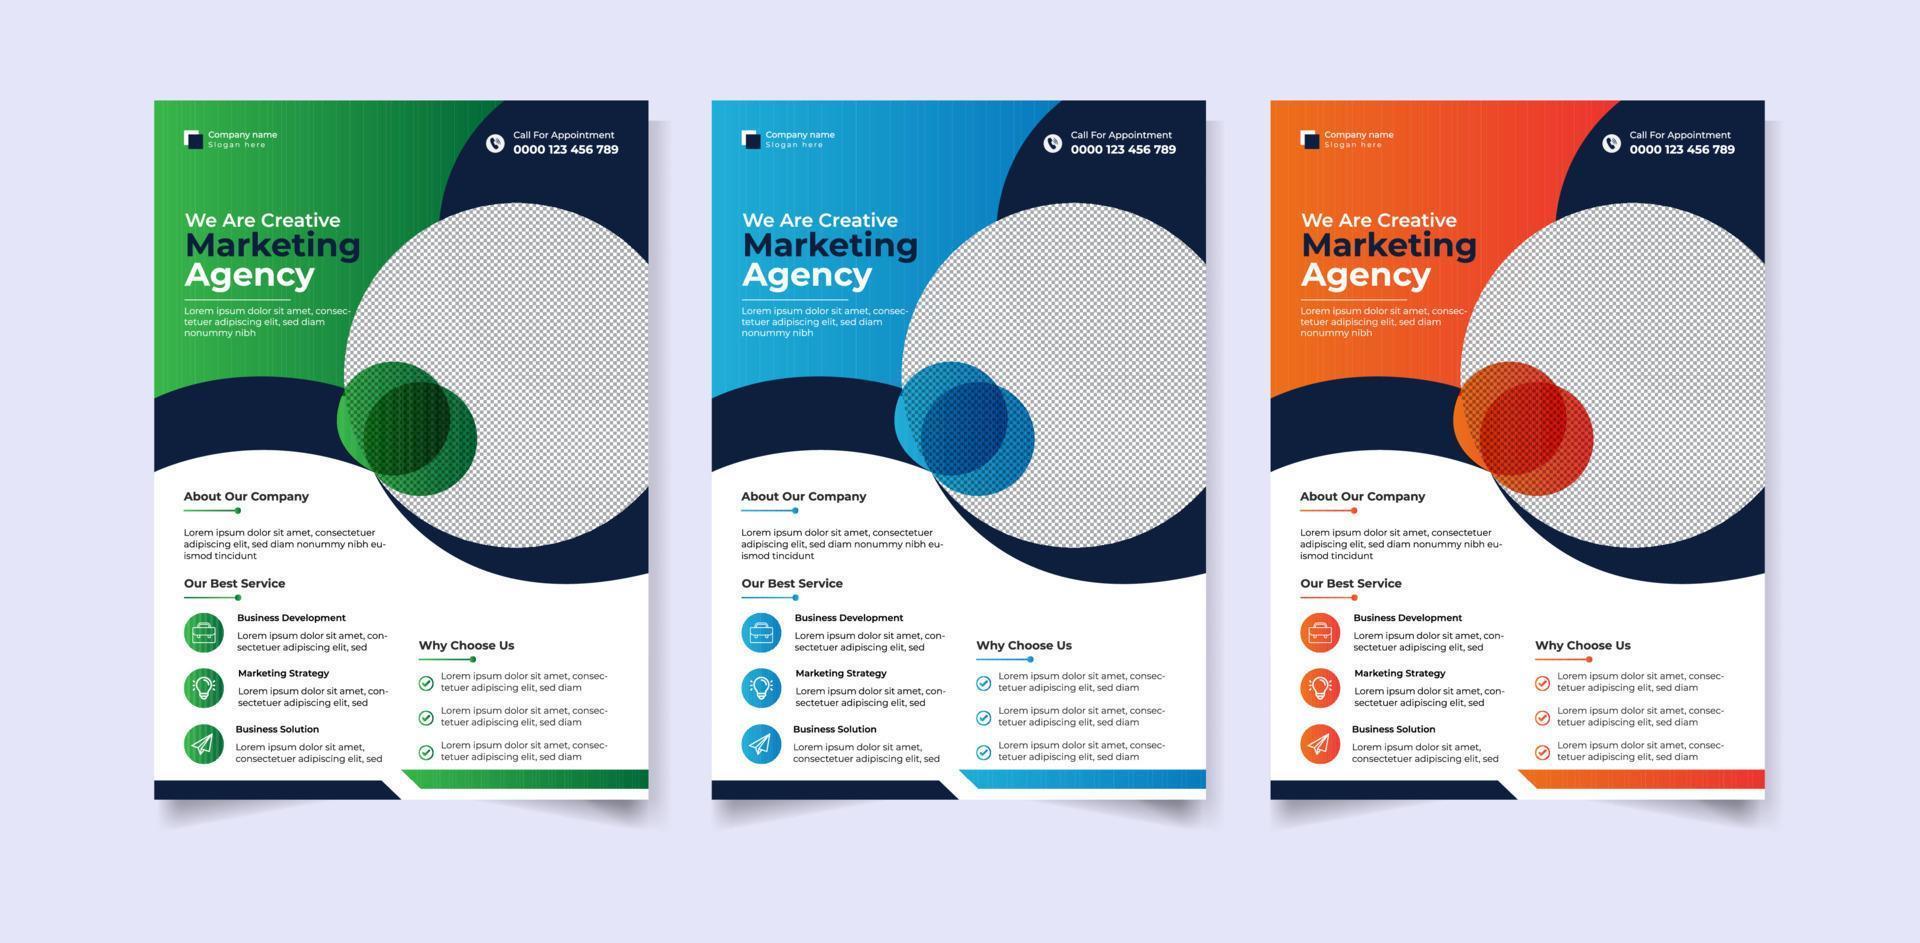 Modern digital marketing agency a4 flyer template vector